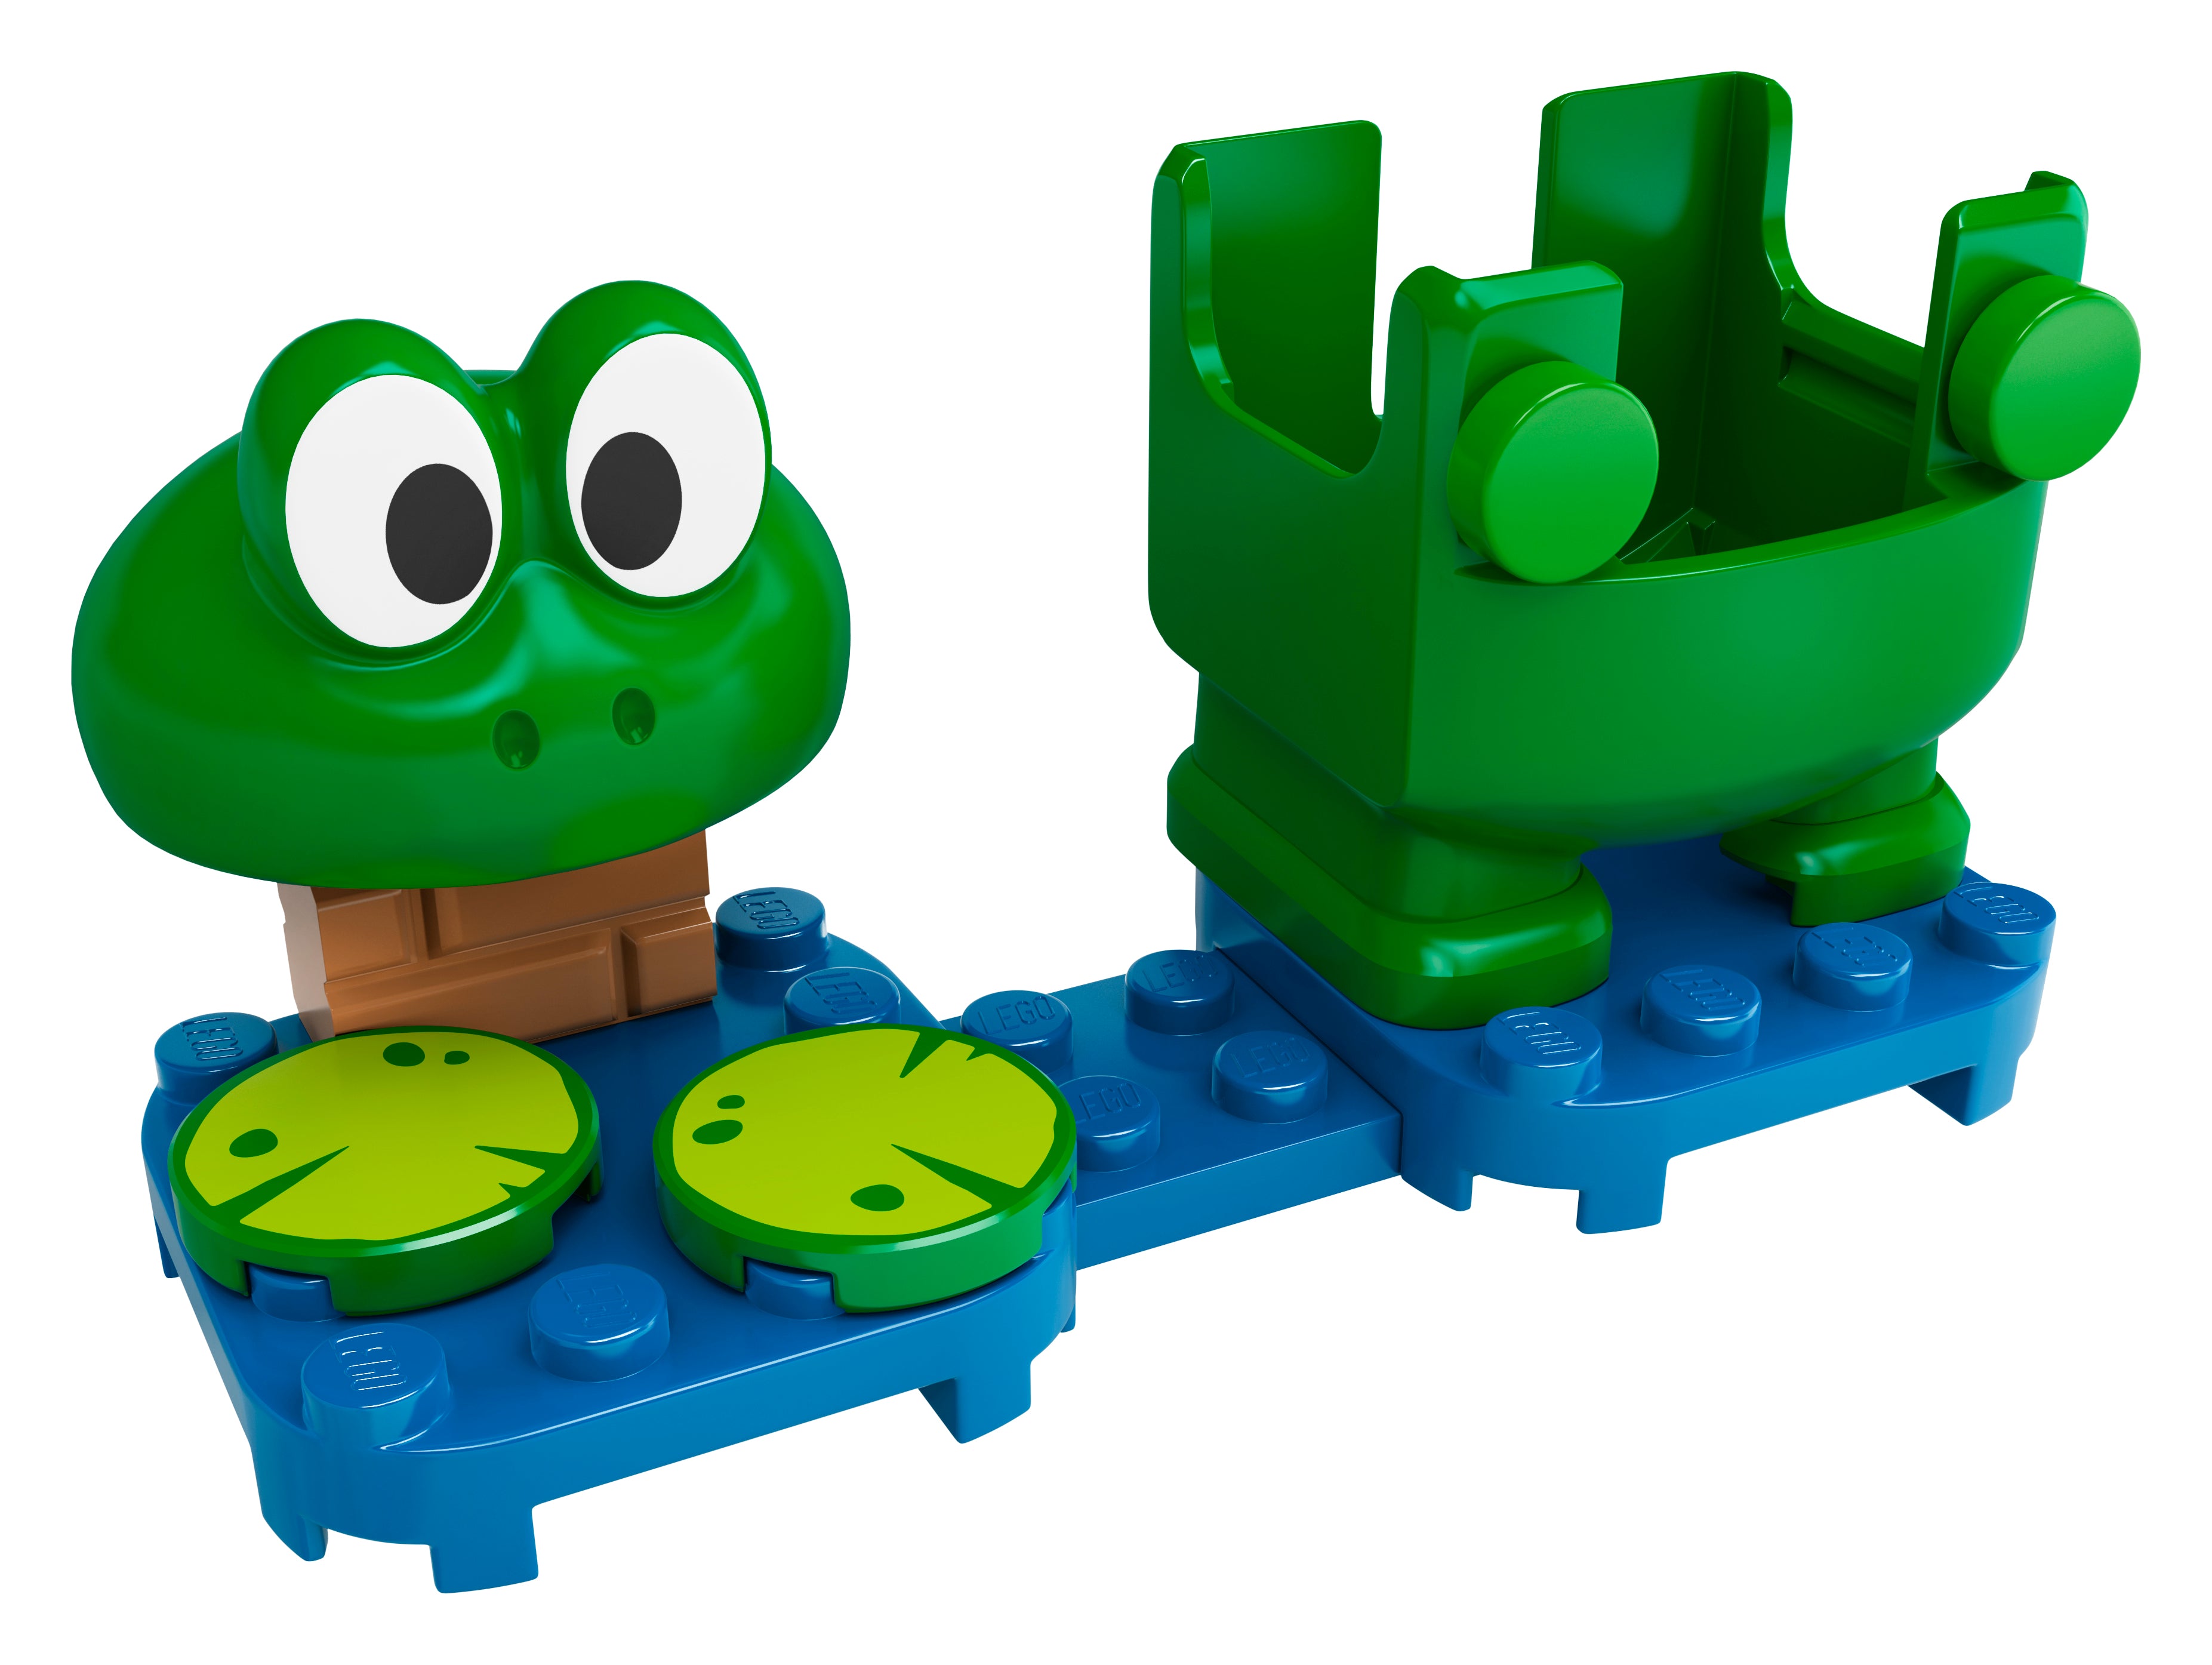 Paket za energiju – žabac Mario